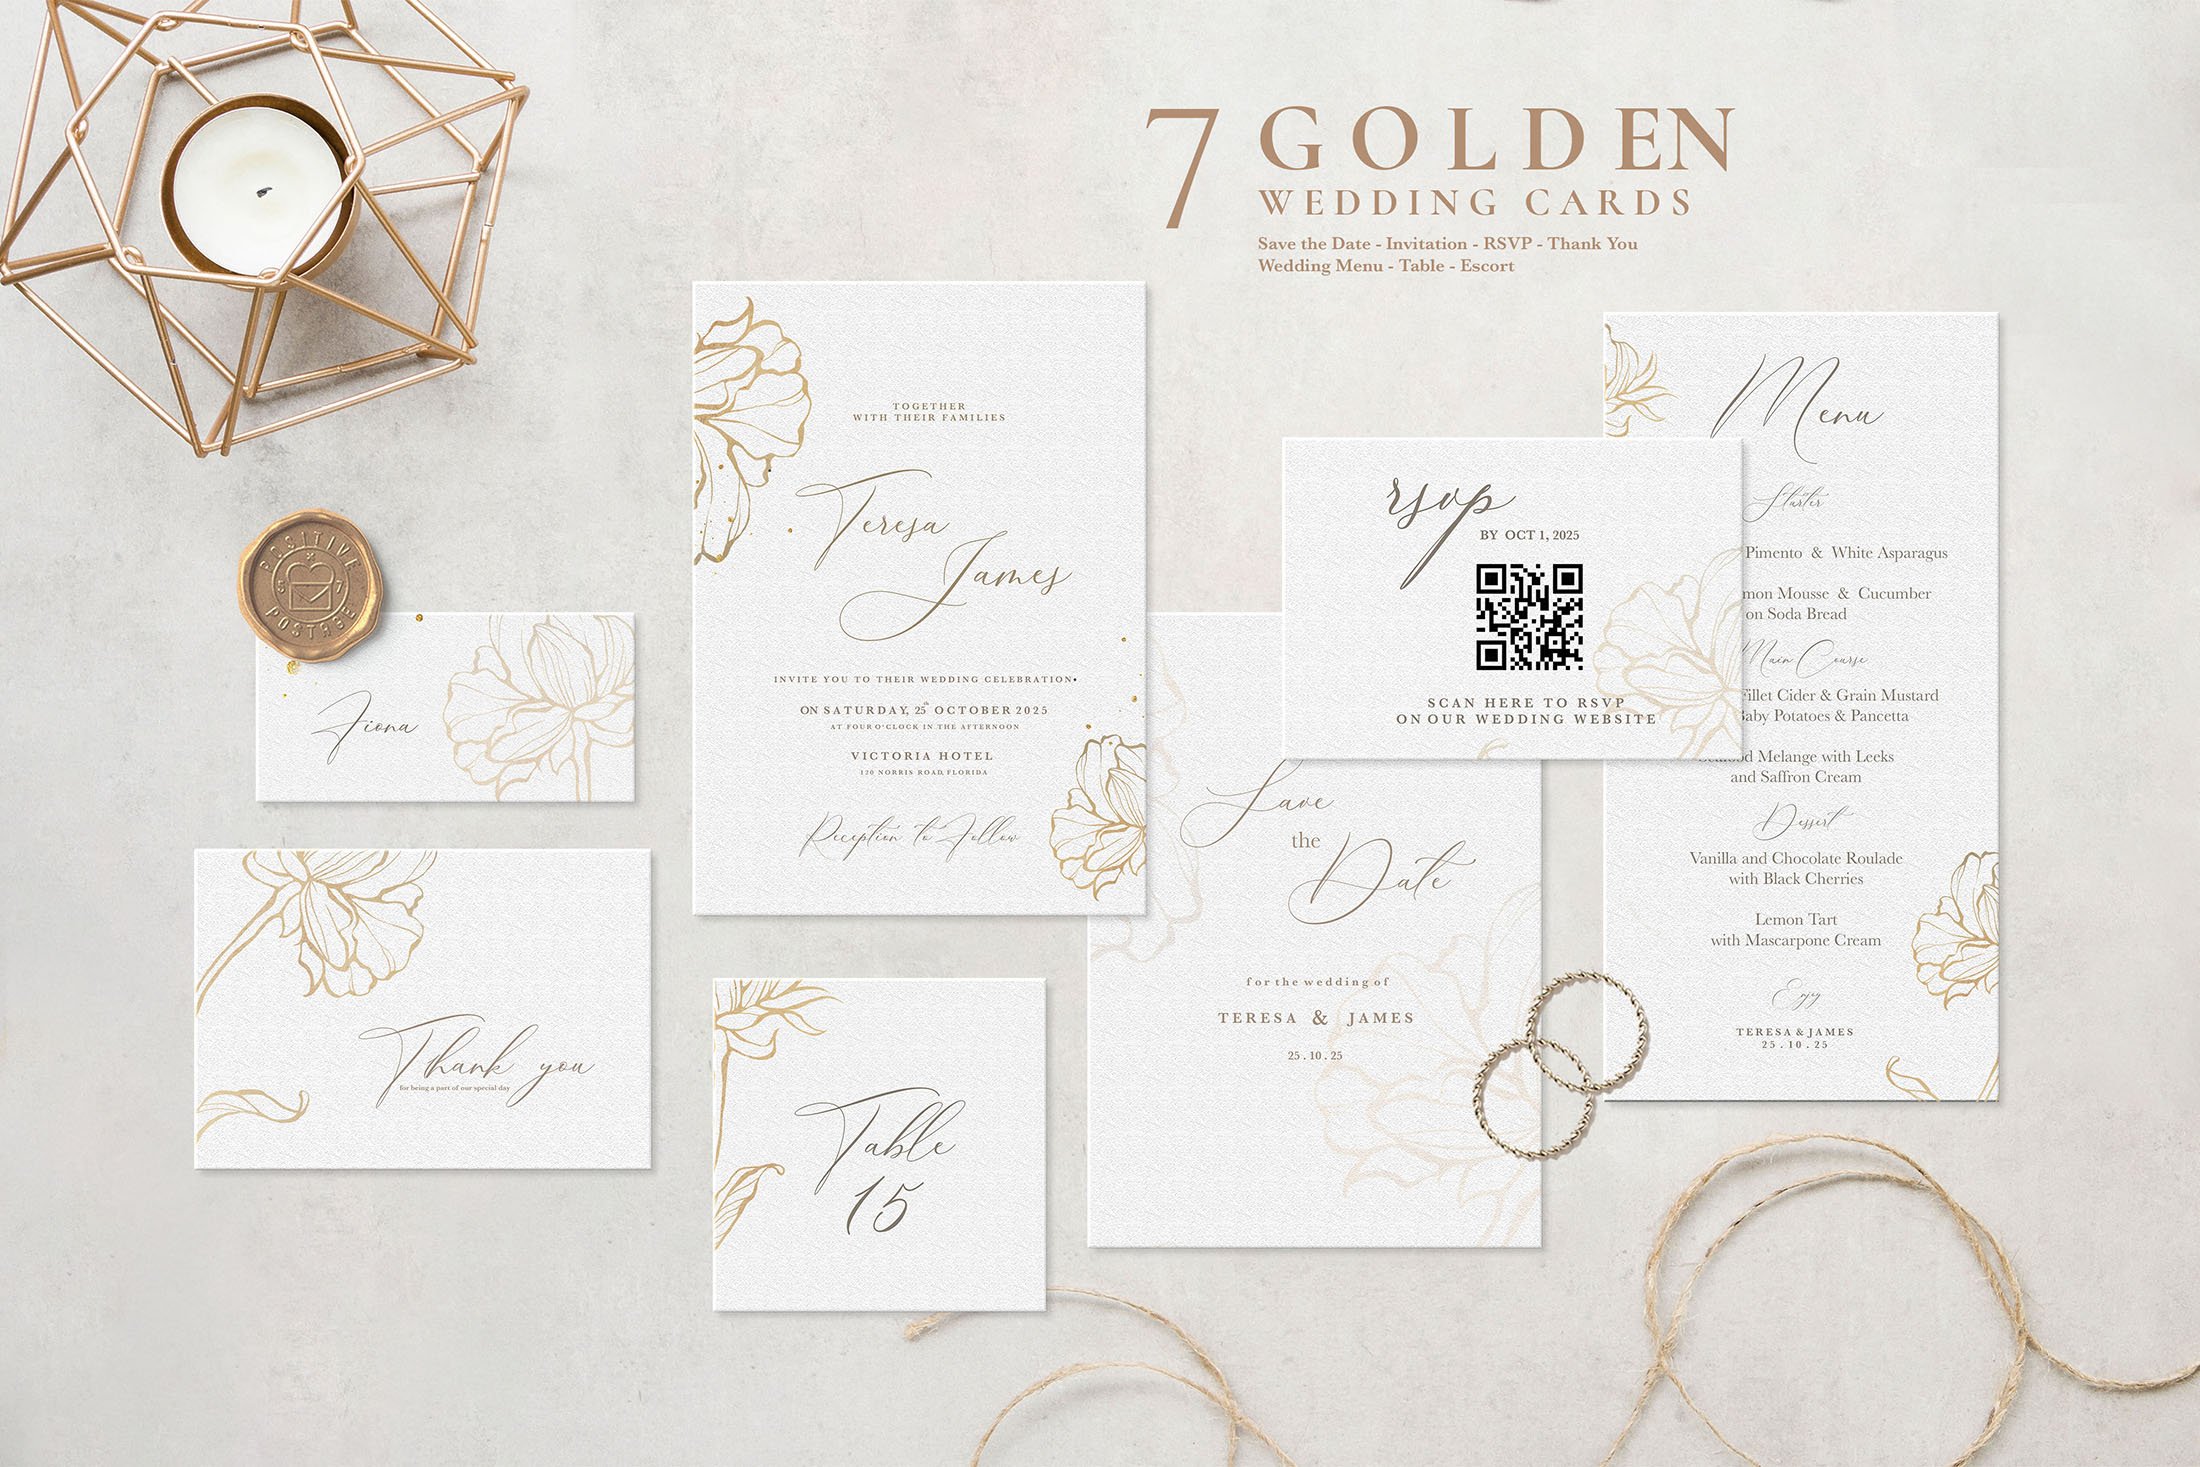 Golden (Wedding Suite) cover image.